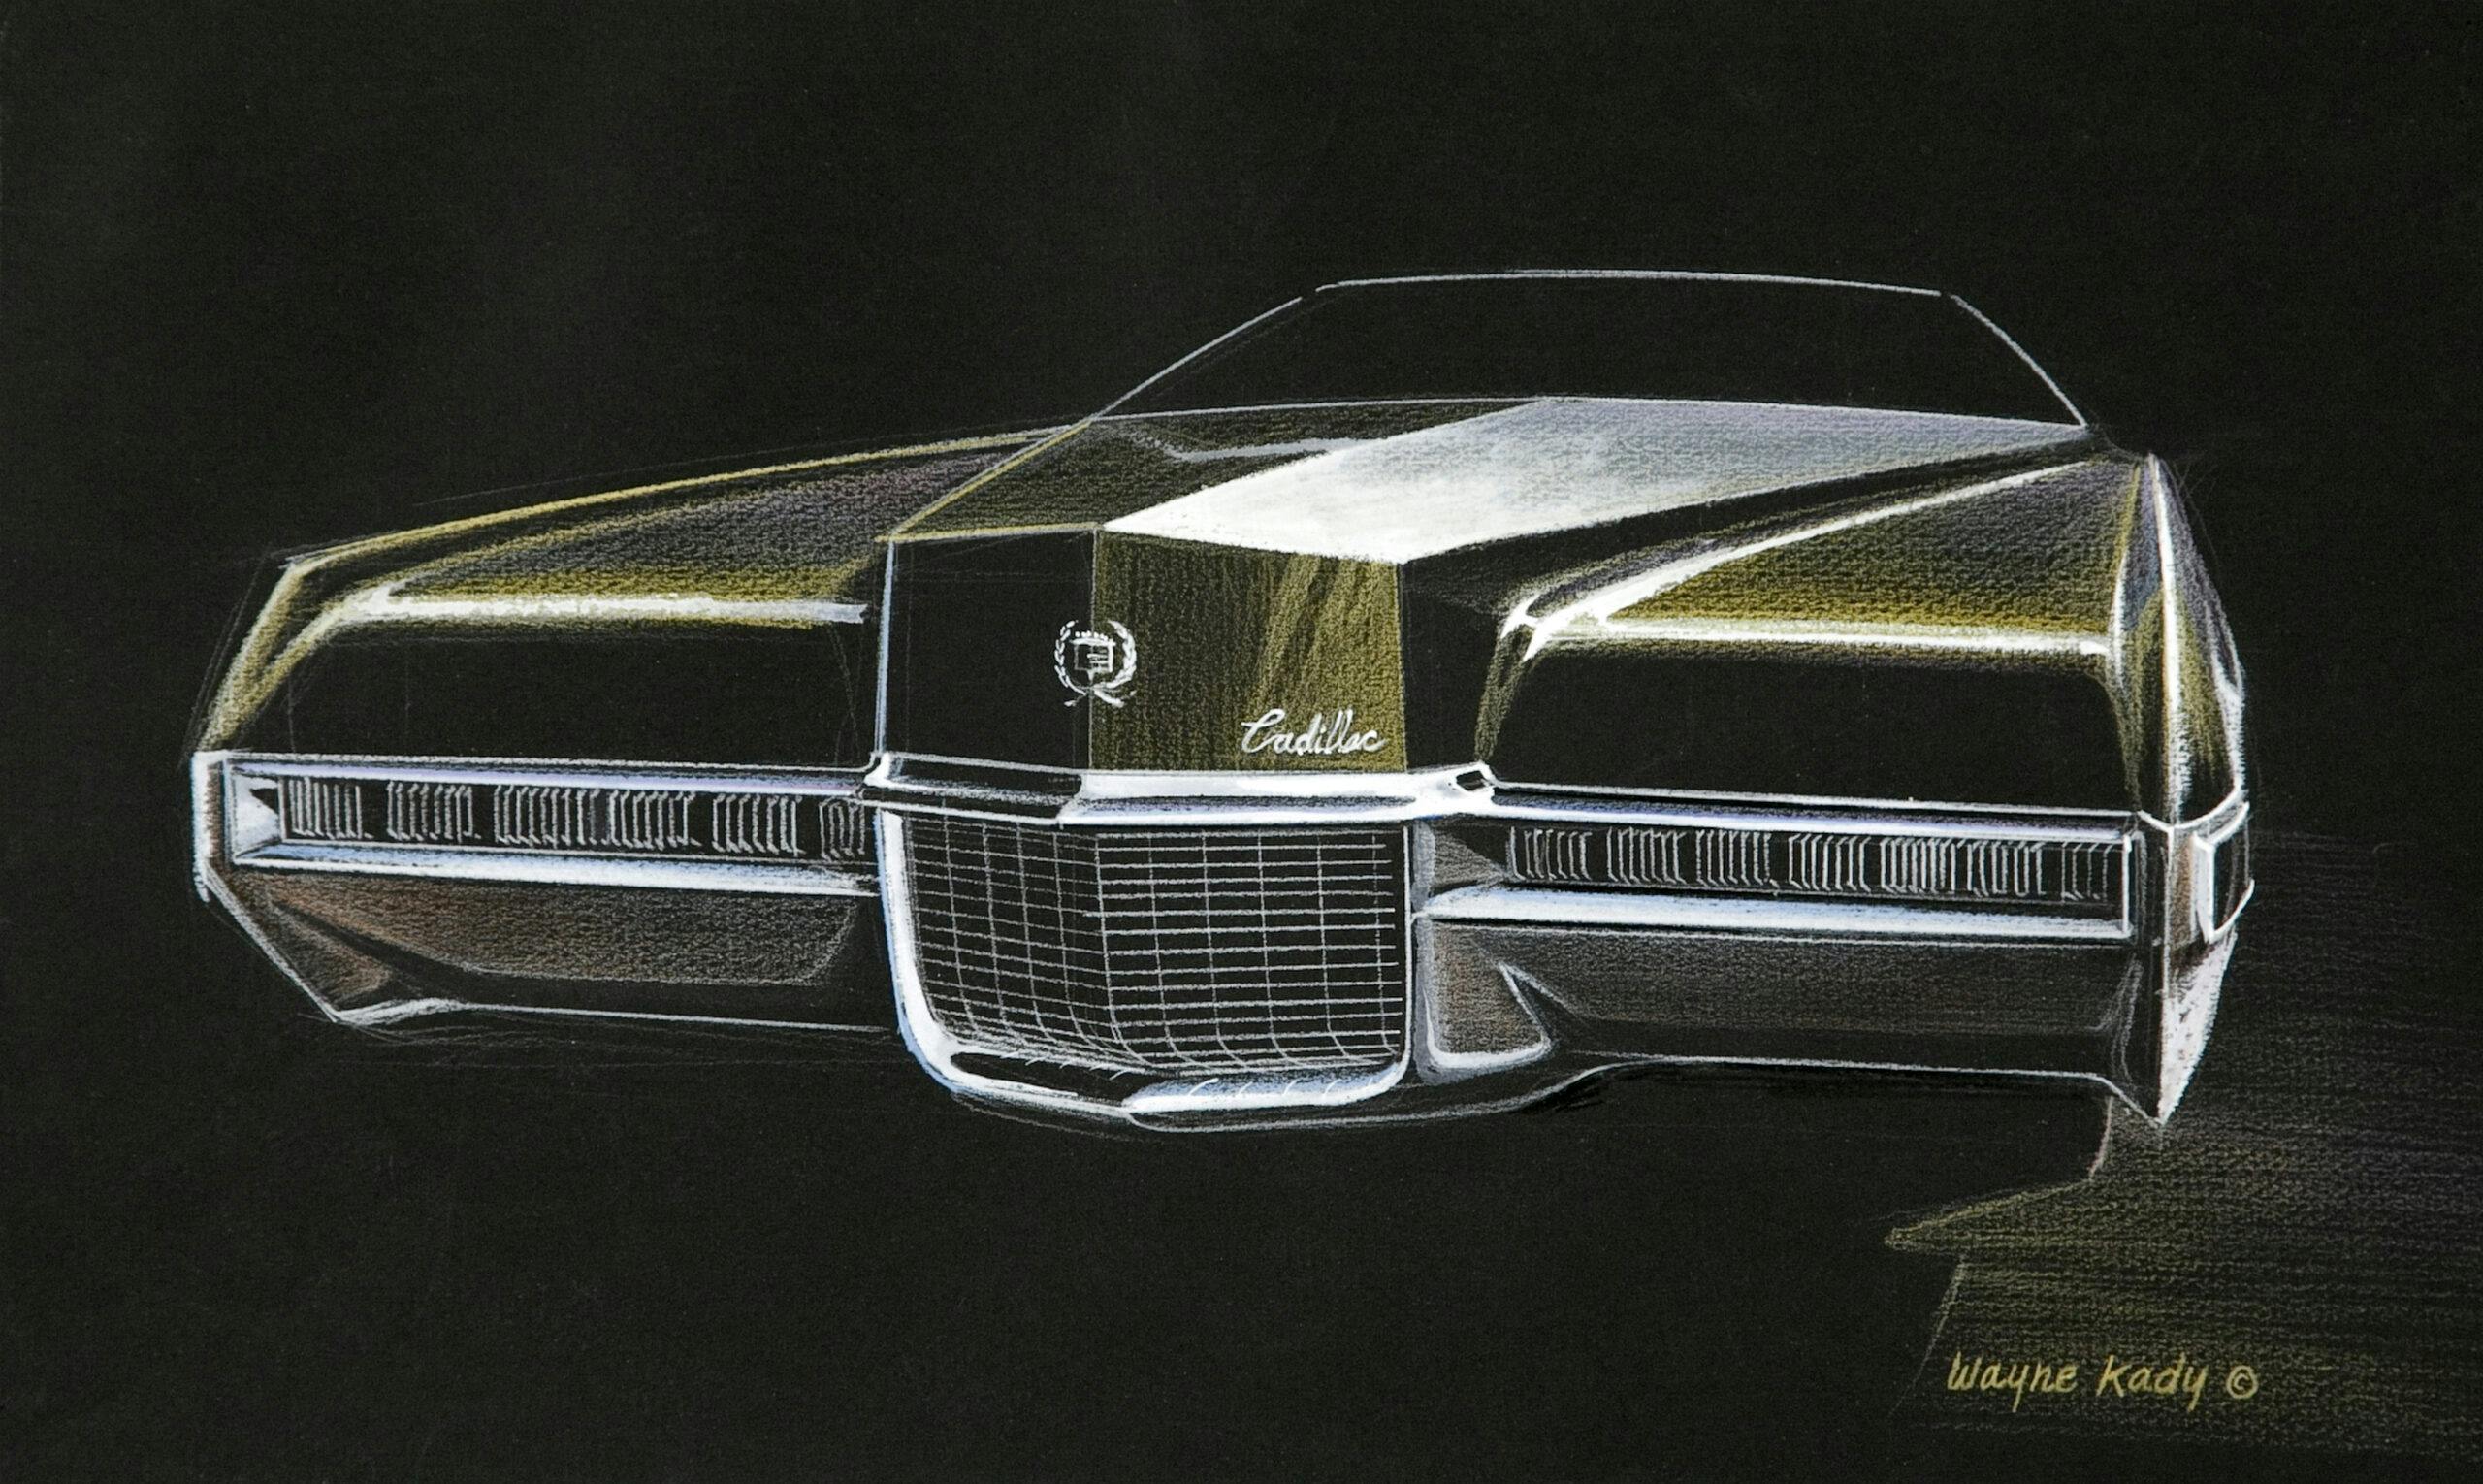 GM Wayne Kady Design Cadillac illustration